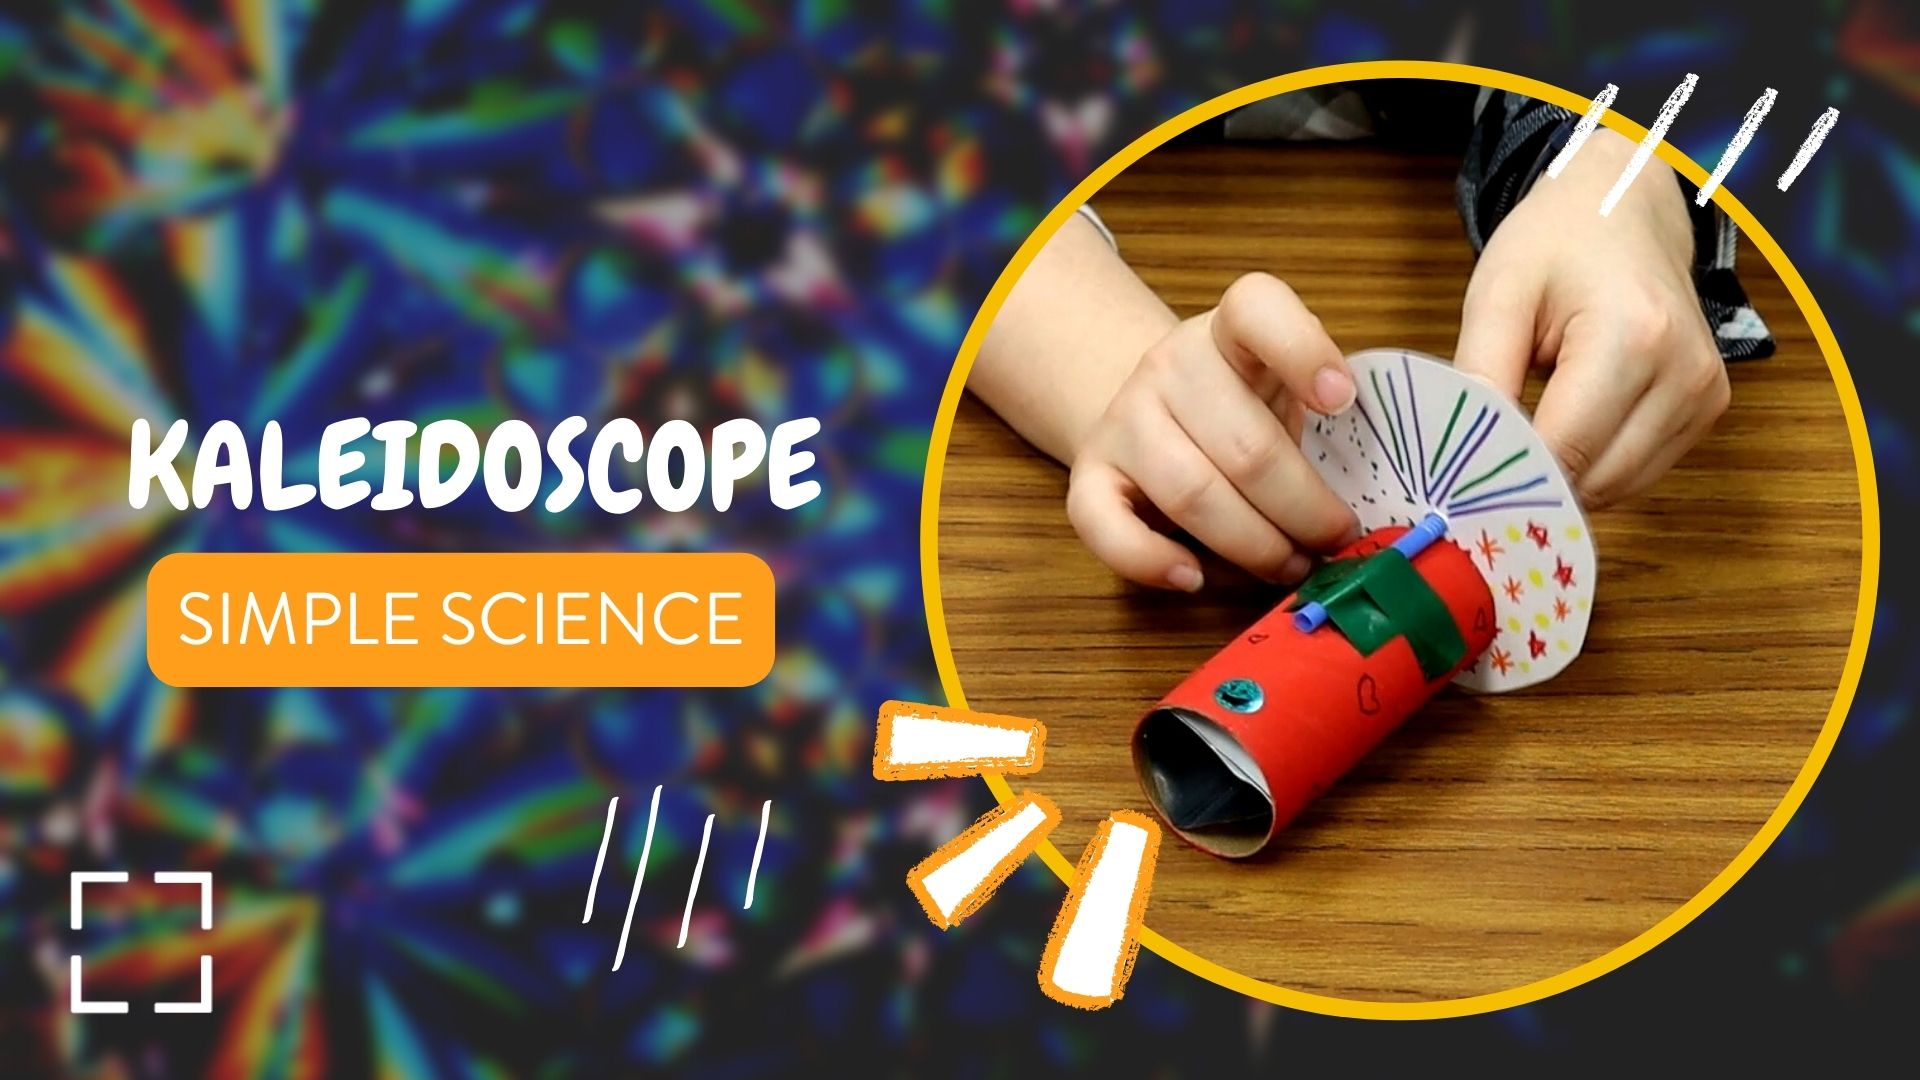 How to Make a Kaleidoscope